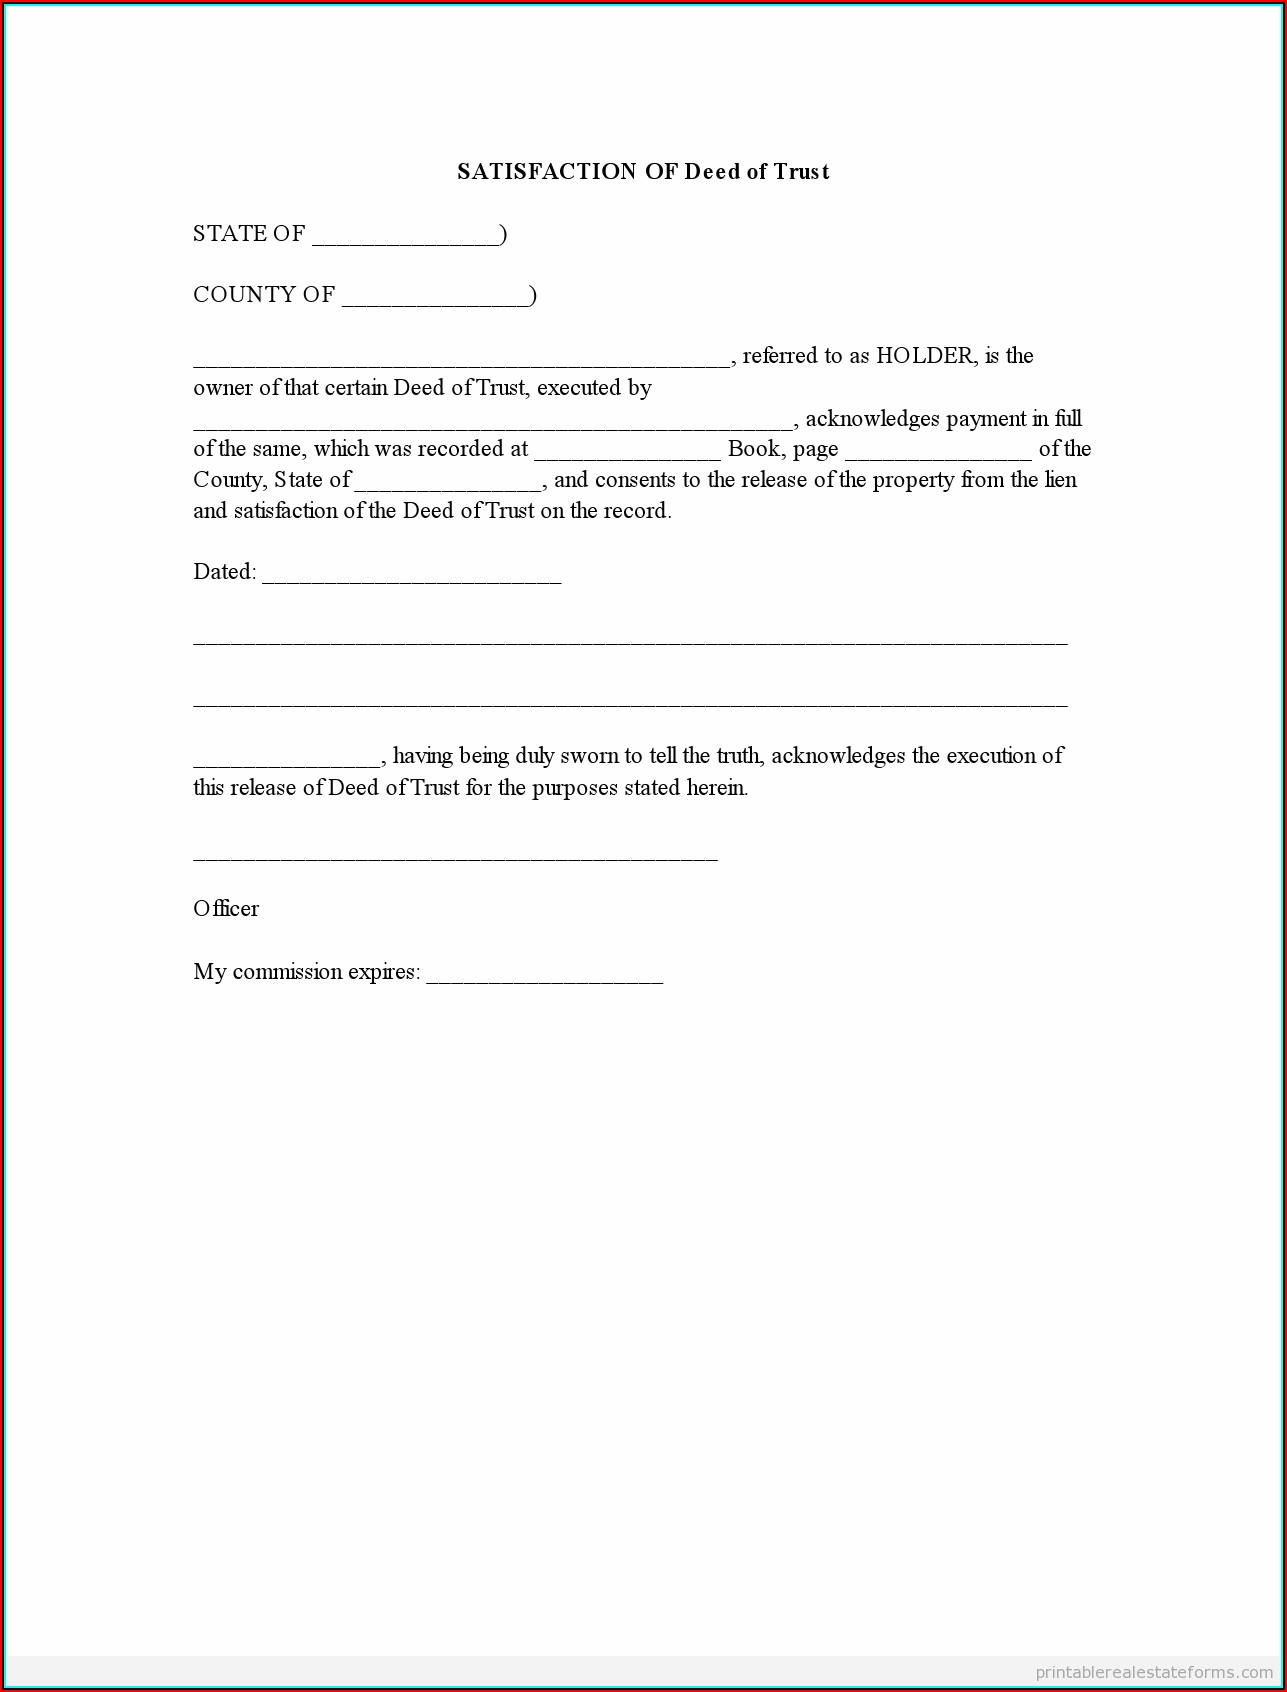 Free Property Lien Release Form